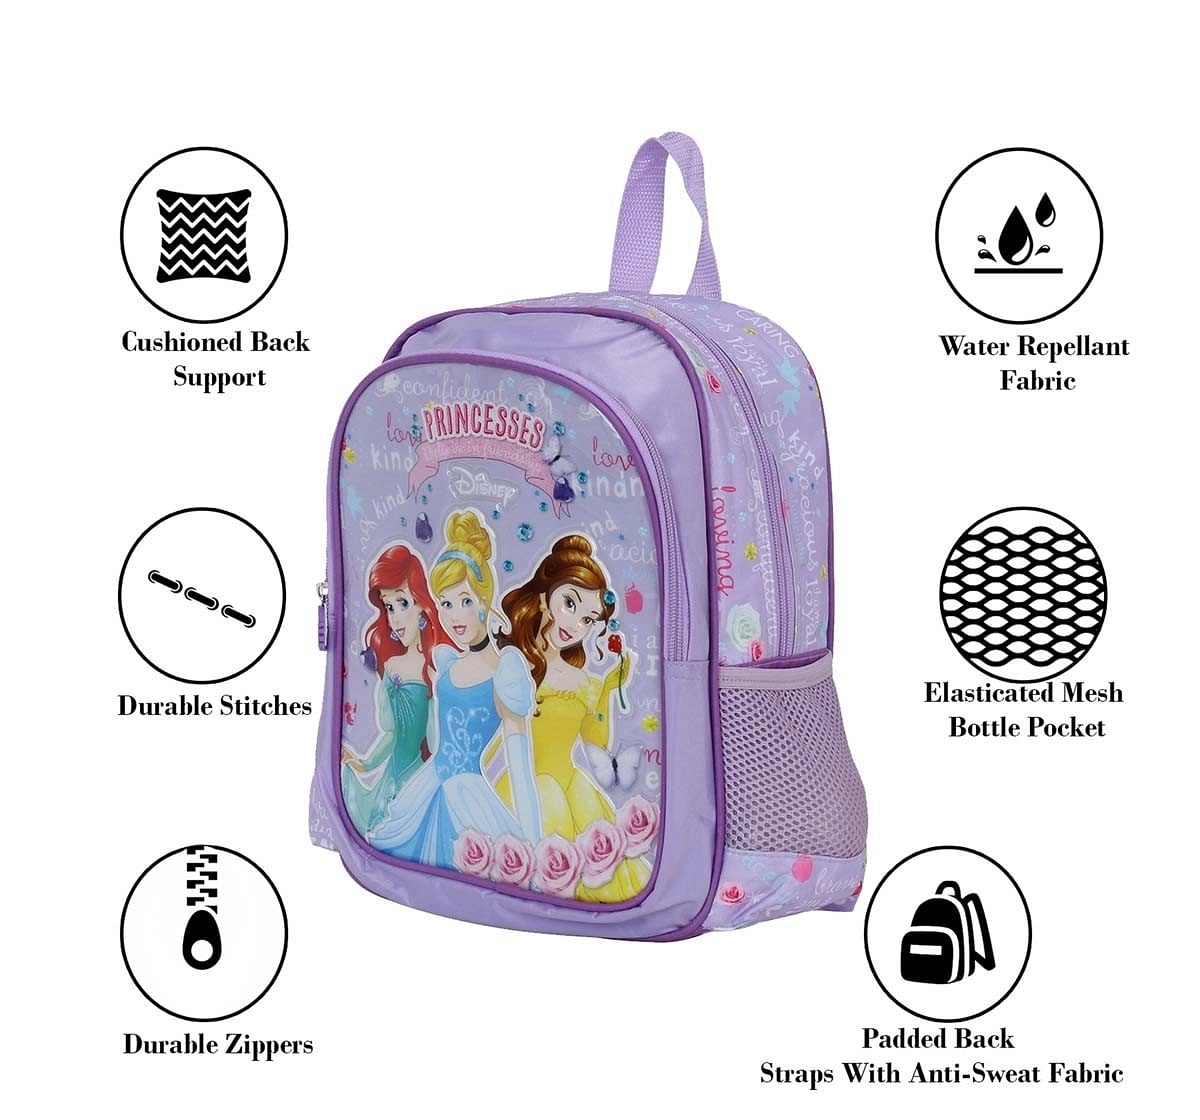 Disney Princess Believe In Friendship 12" Backpack Bags for age 3Y+ 